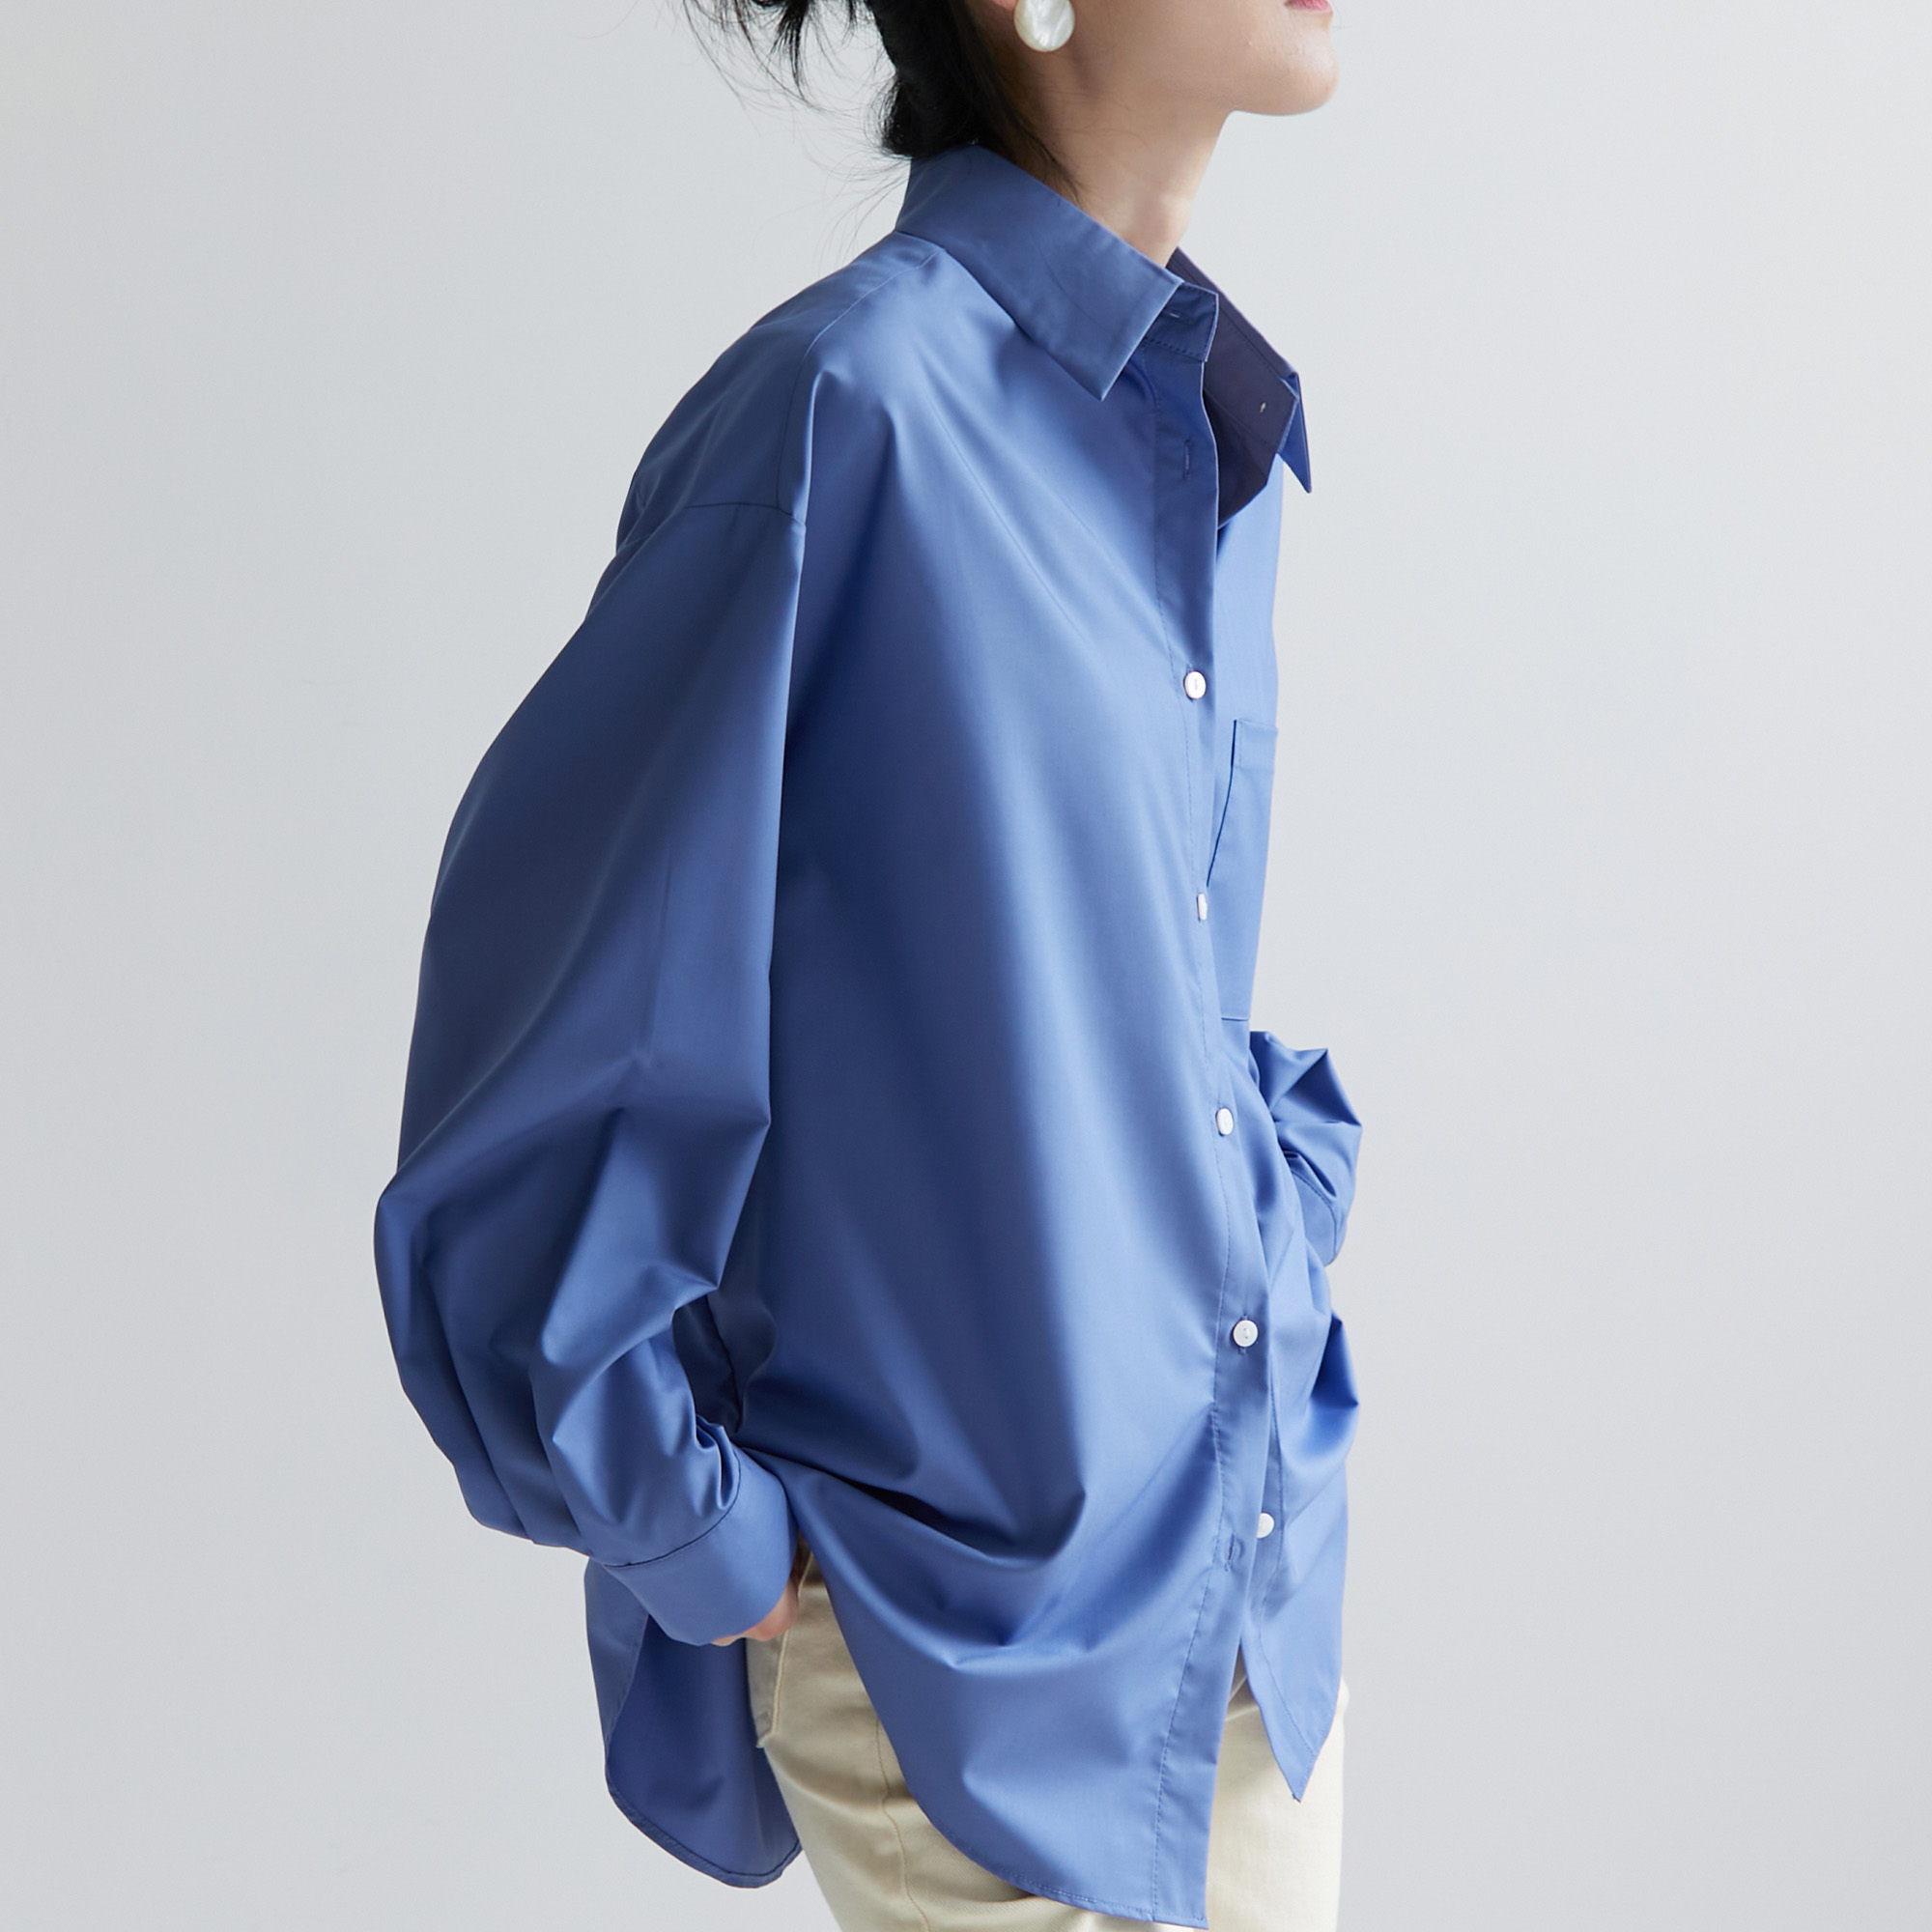 XINER 克莱因蓝色oversize高端长袖衬衫女内搭叠穿休闲衬衣春季